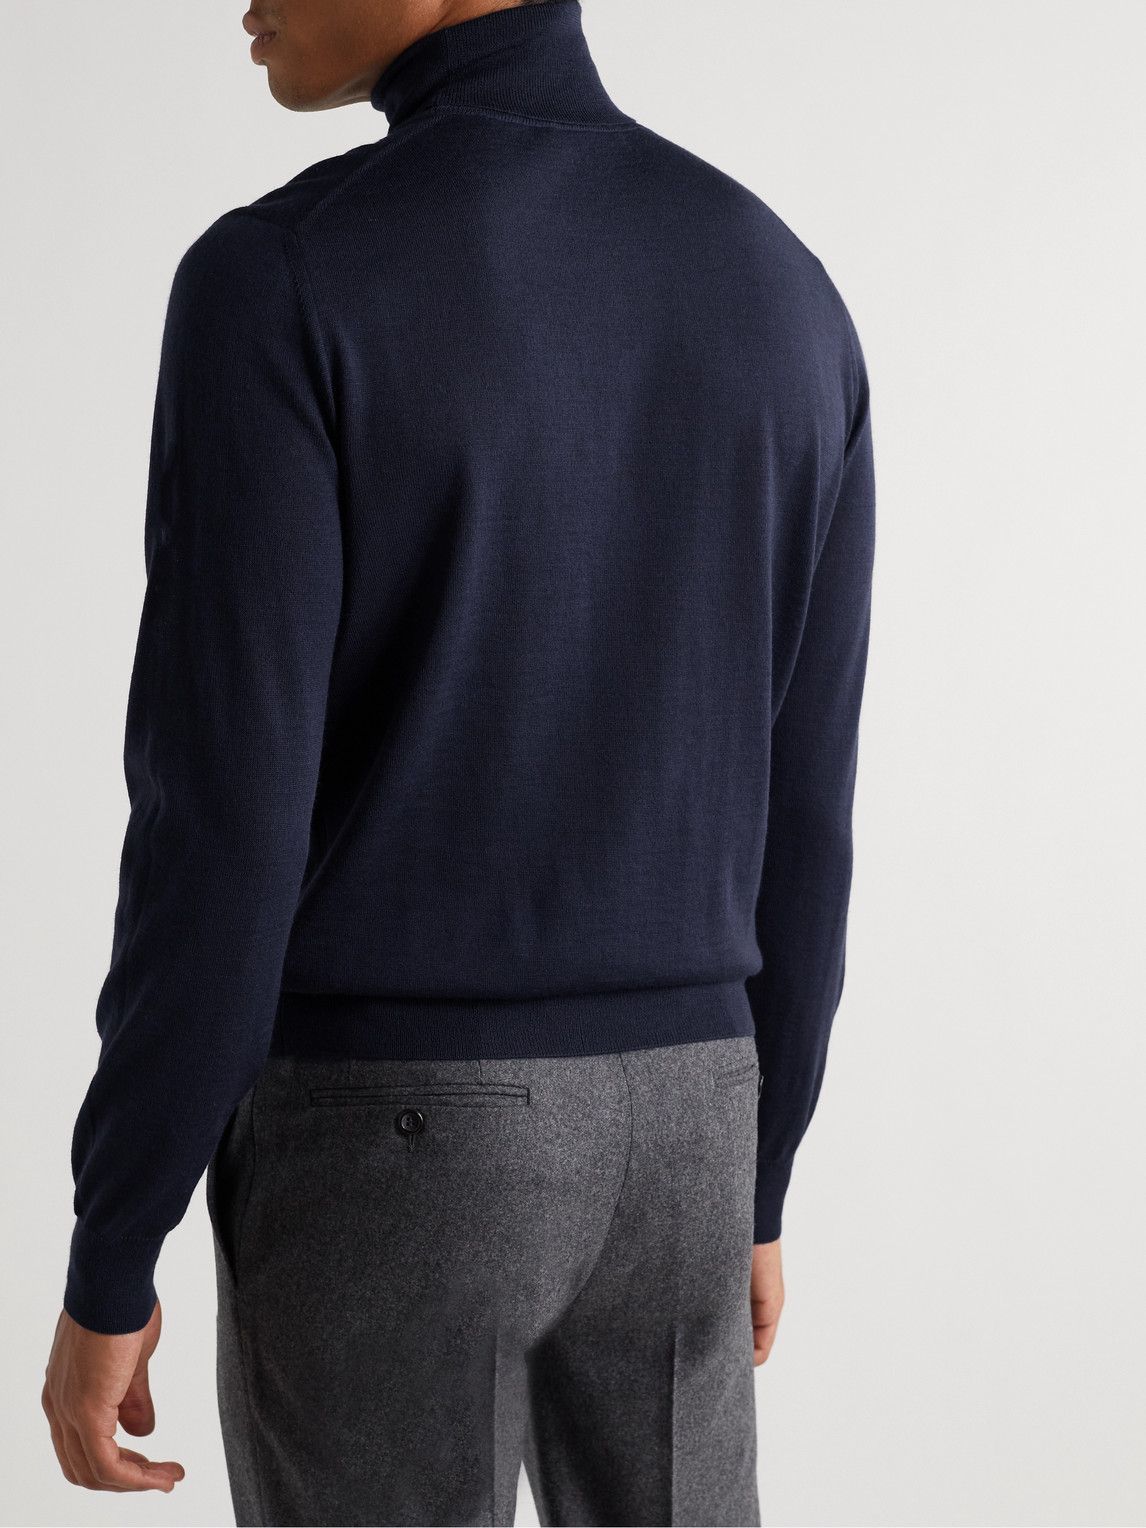 Canali - Merino Wool Rollneck Sweater - Blue Canali